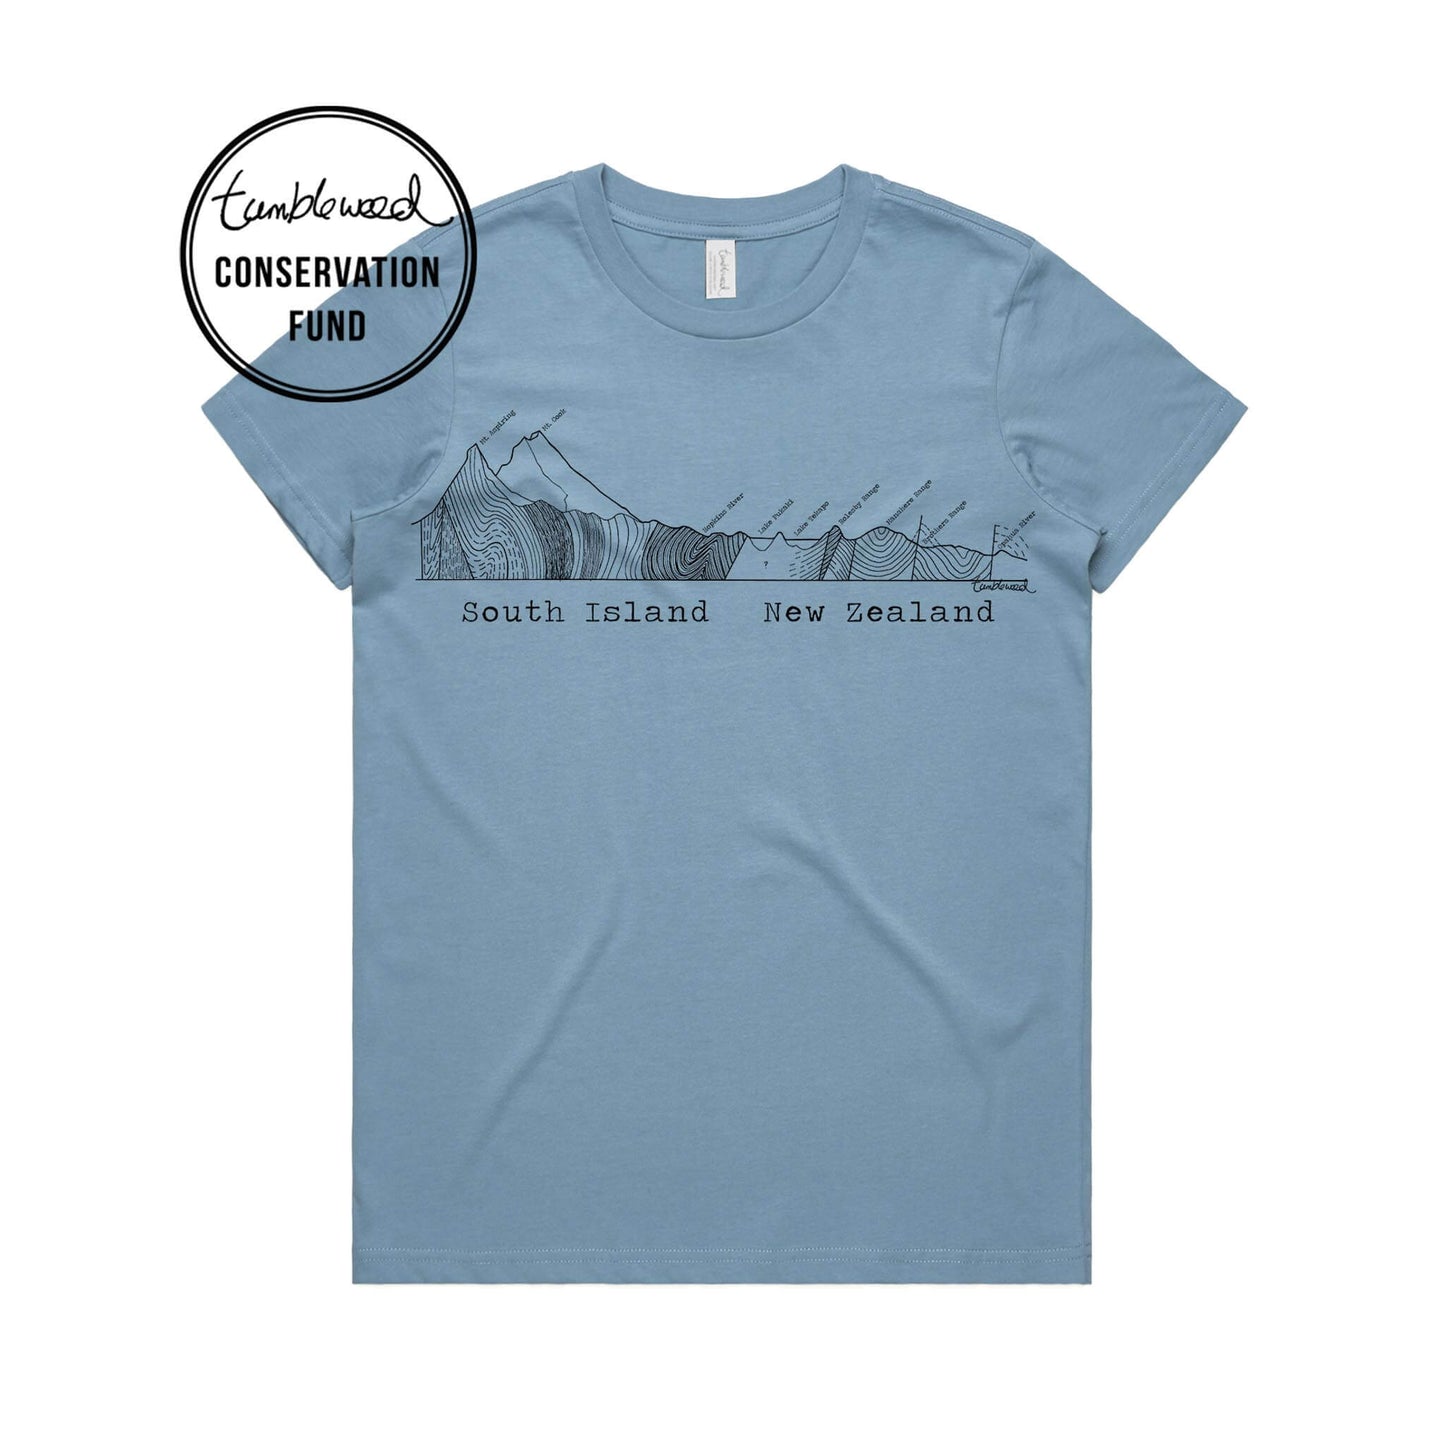 South Island Cross Section T-shirt